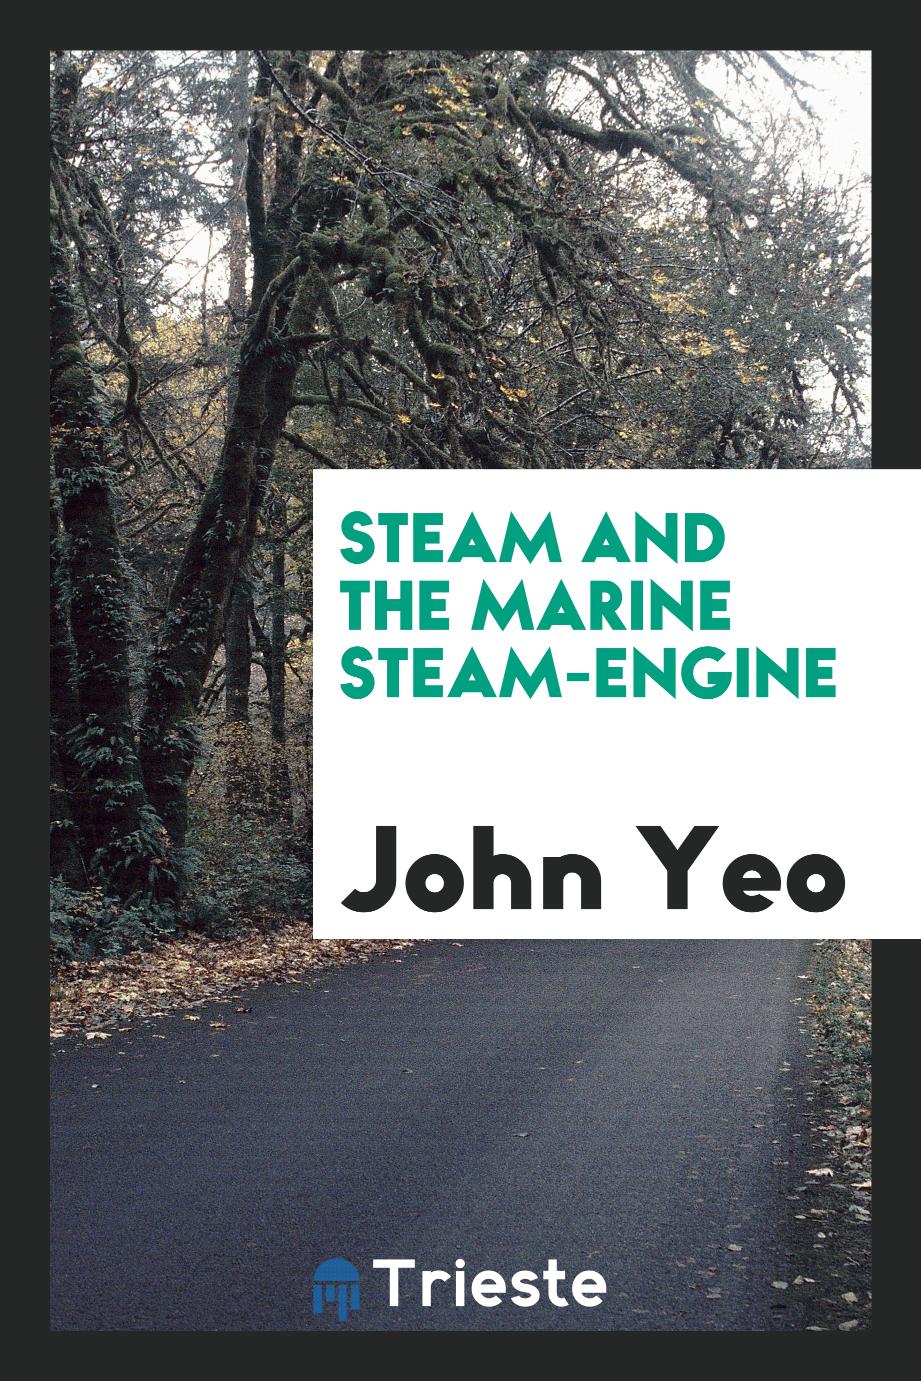 Steam and the Marine Steam-Engine